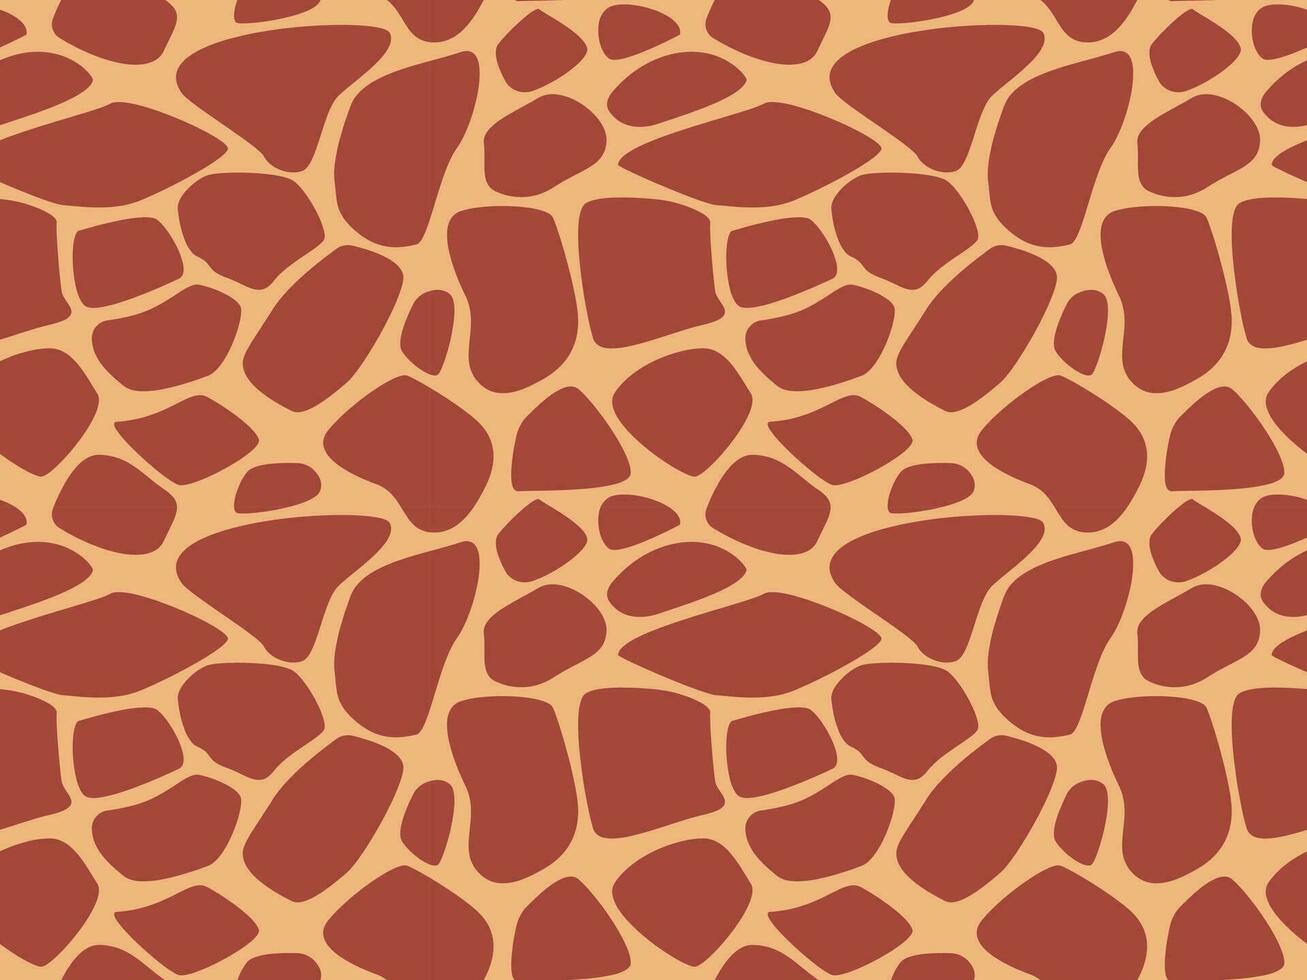 abstract giraffe naadloos patroon. dier huid textuur, modern meetkundig achtergrond. vlak vector illustratie.